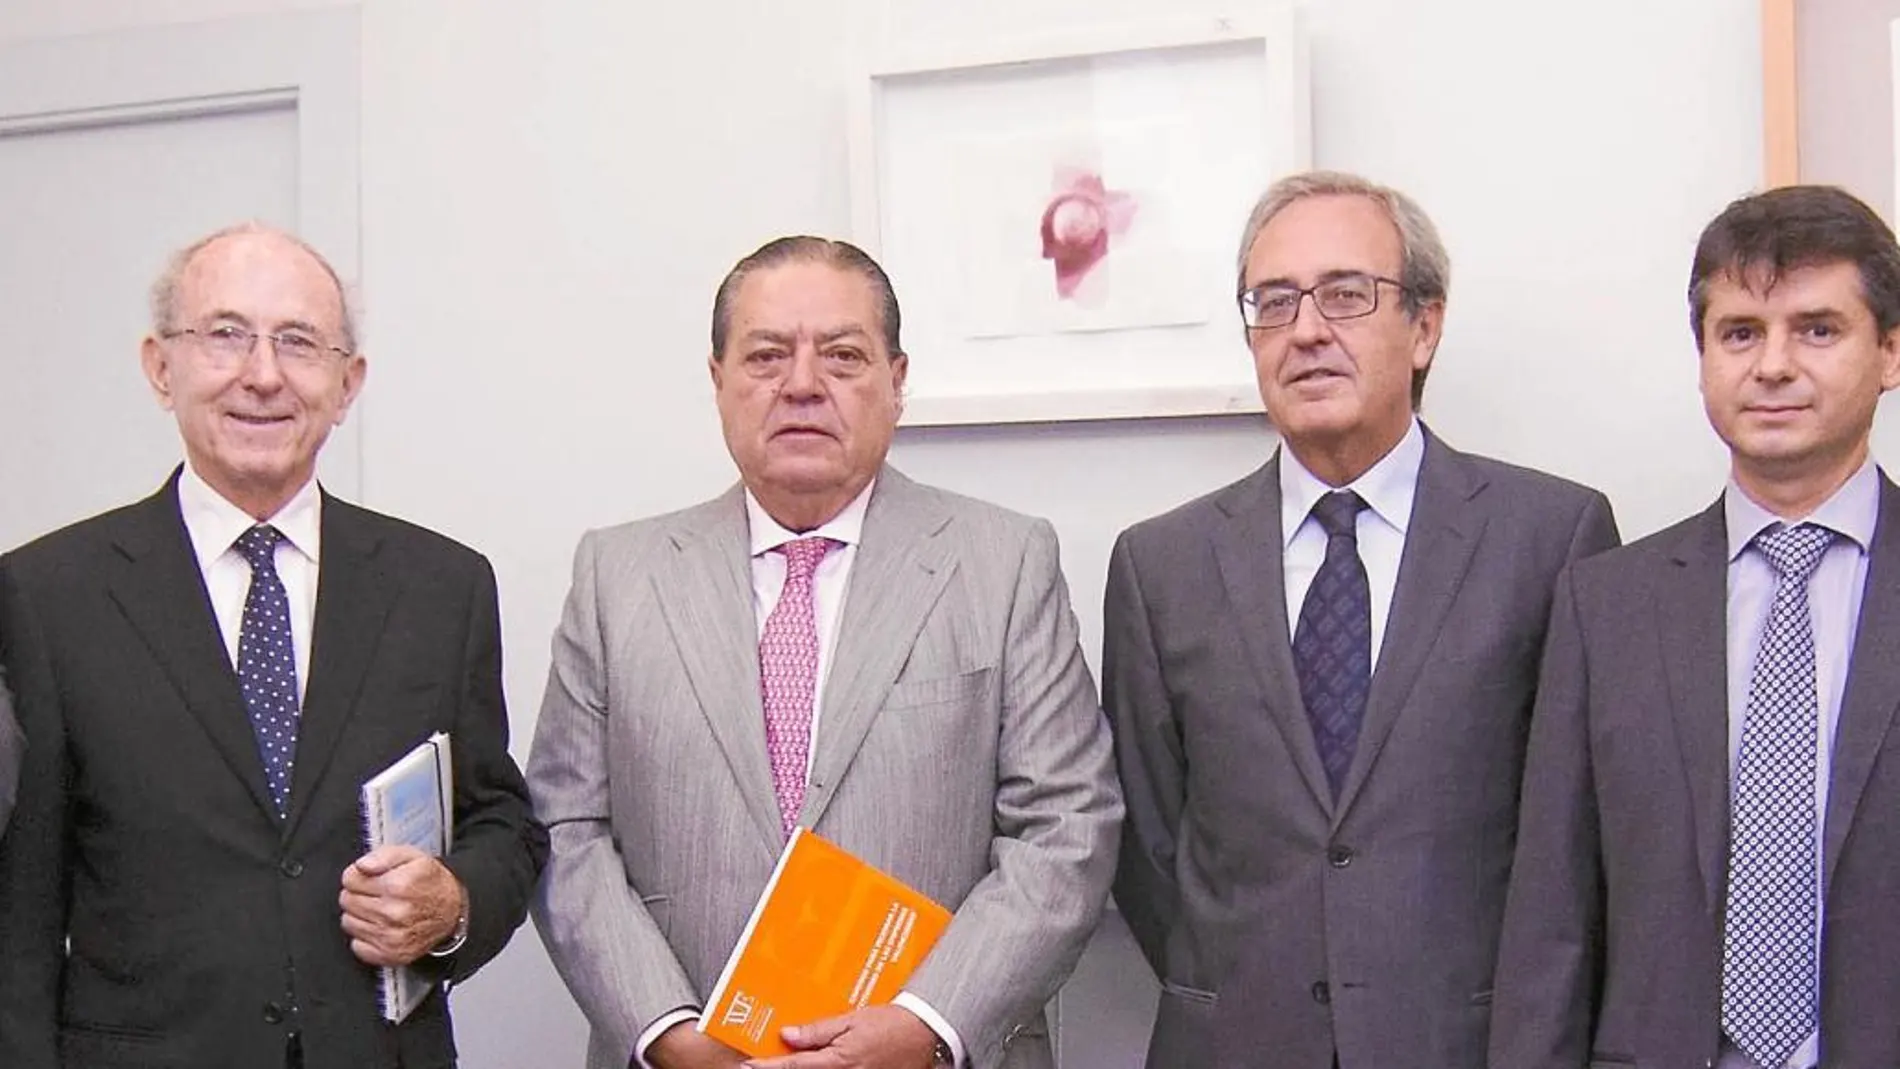 De. izda a dcha., Francisco Pons, Vicente Boluda, Francisco Pérez y Alejandro Escribá